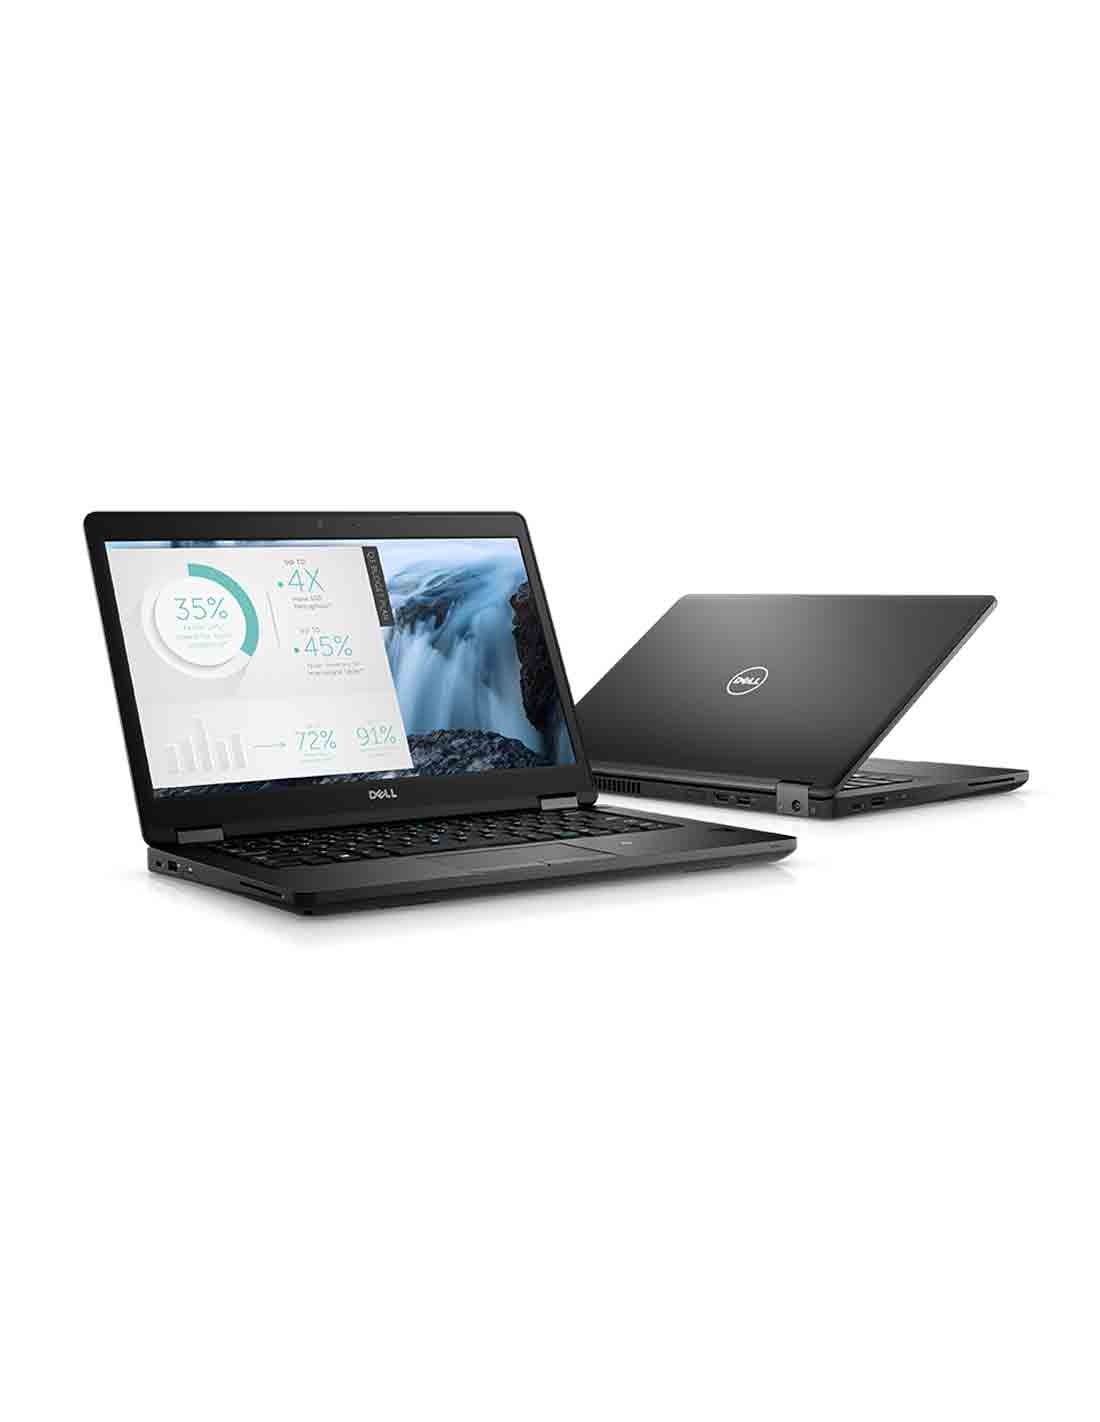 Buy Online Dell Latitude 5580 Business Laptop in Dubai Online Store